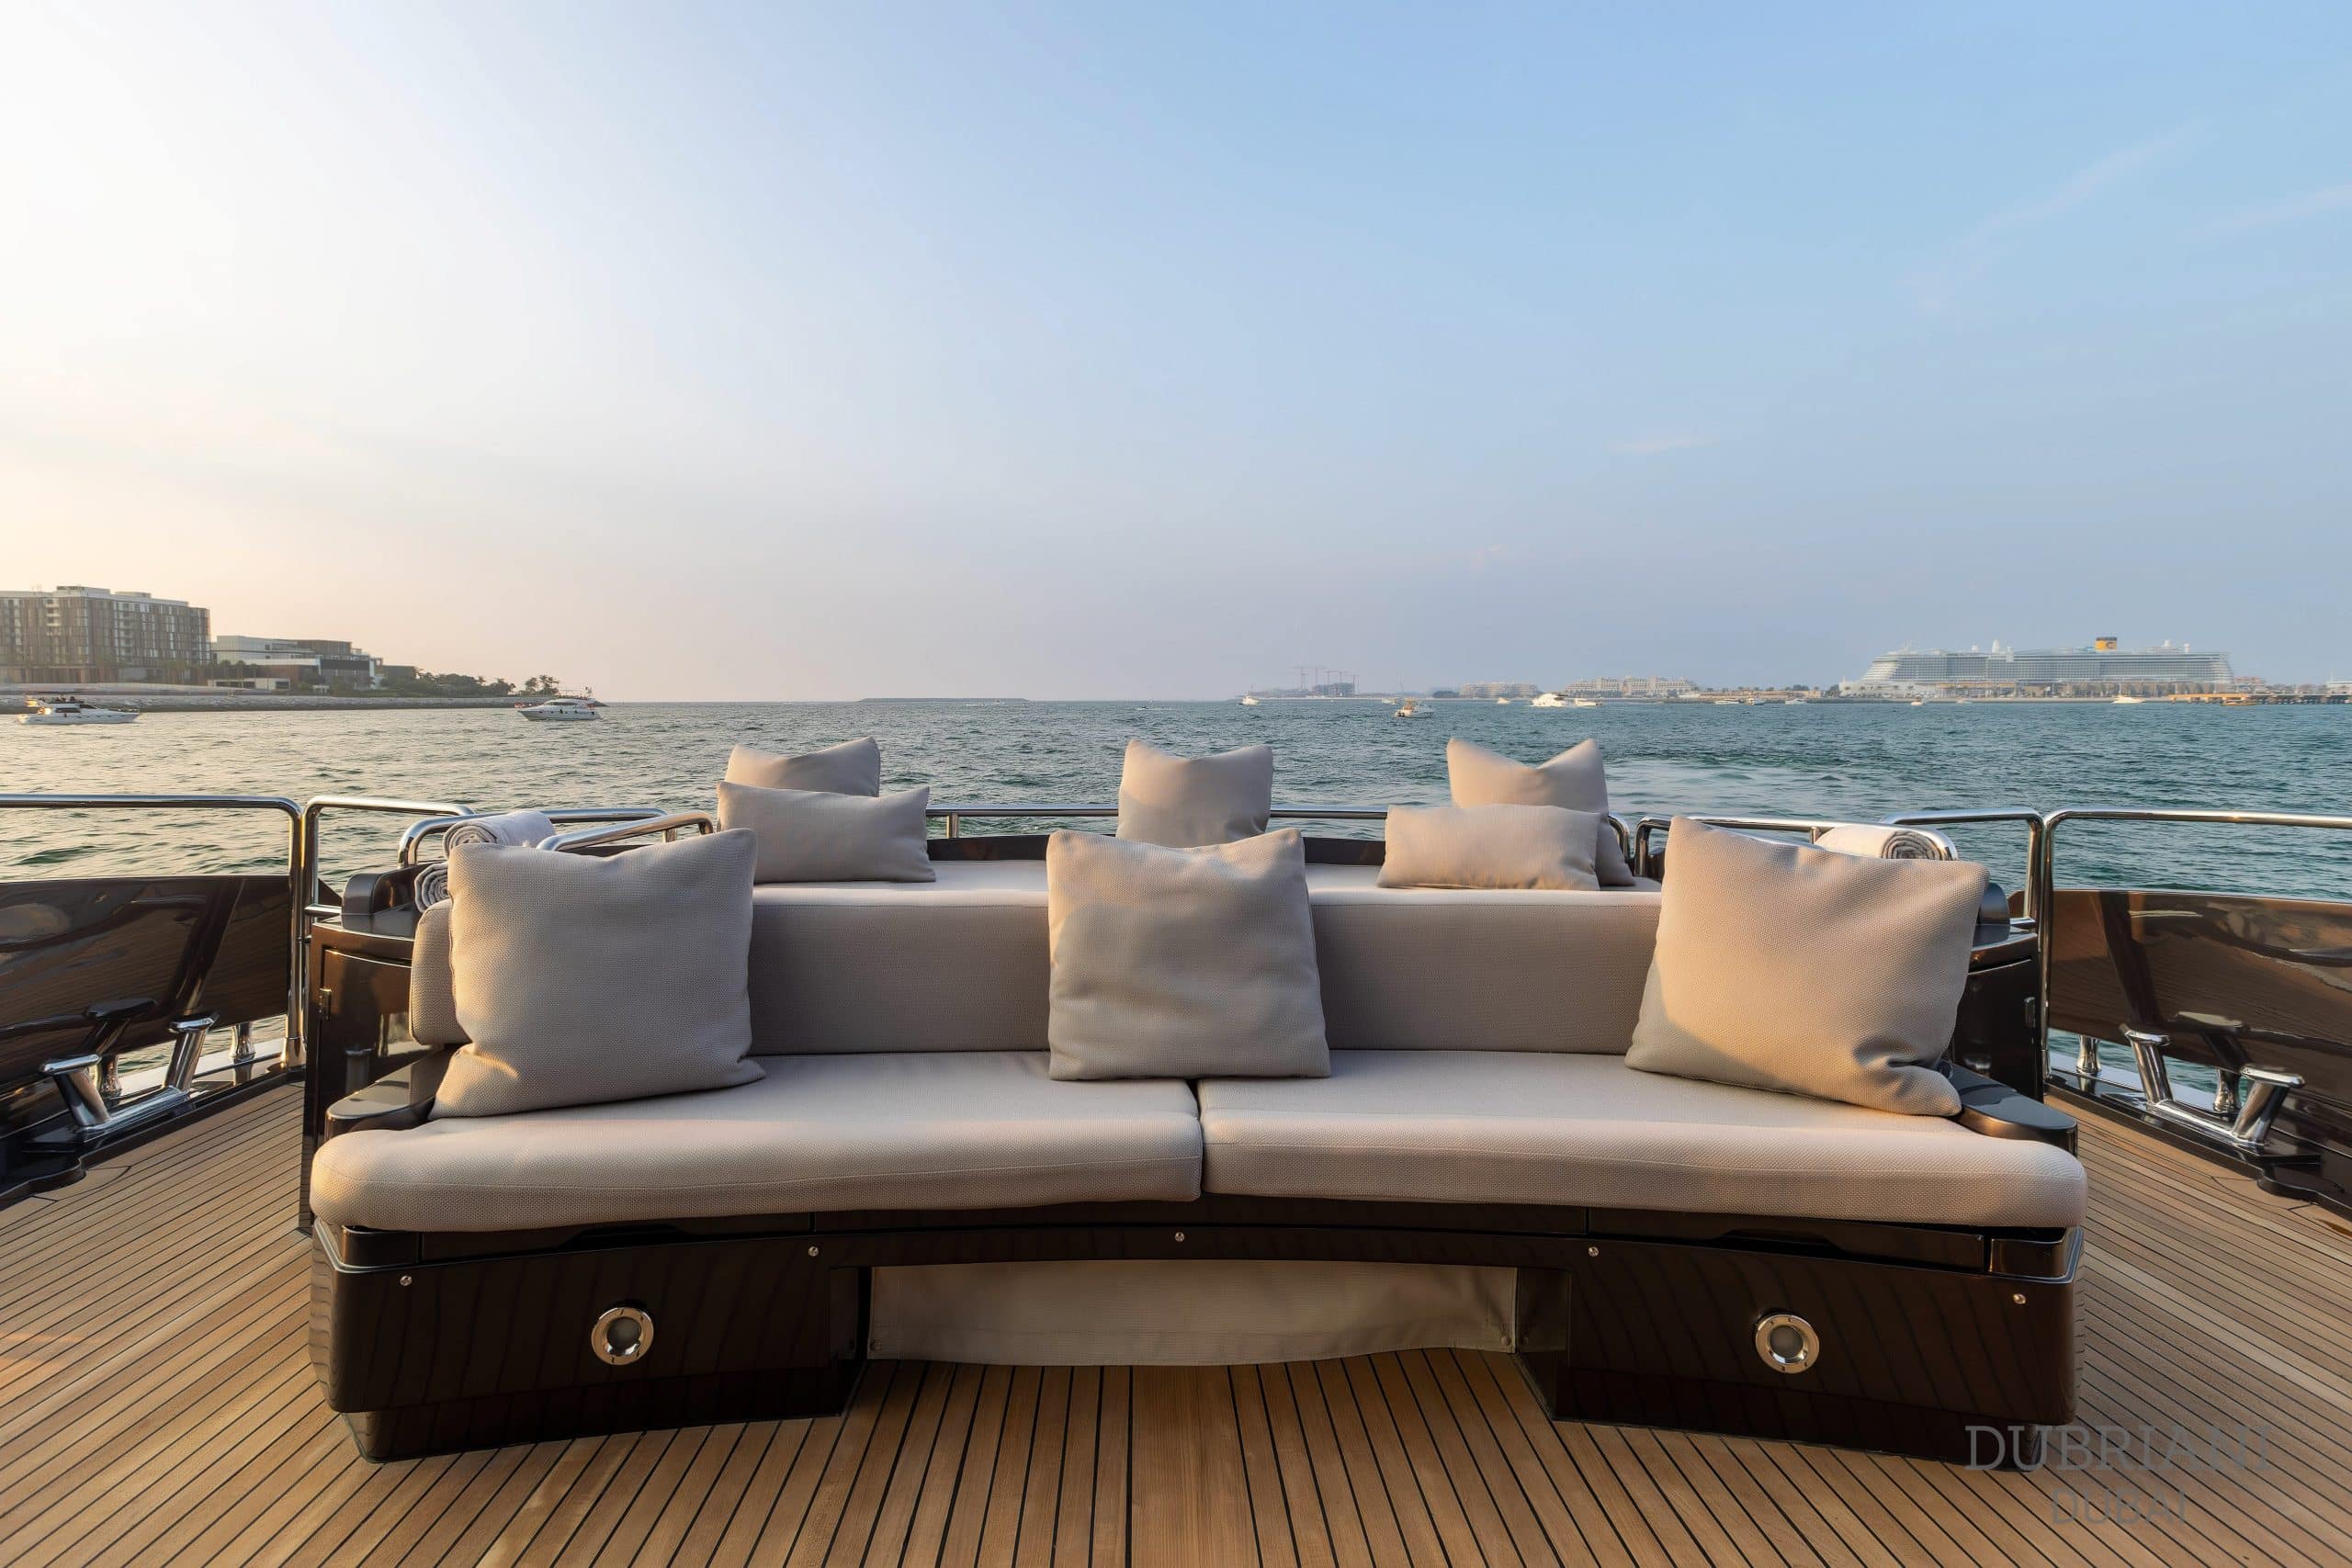 Discover the elegance of the Sunseeker 108 Predator on a Dubai cruise.